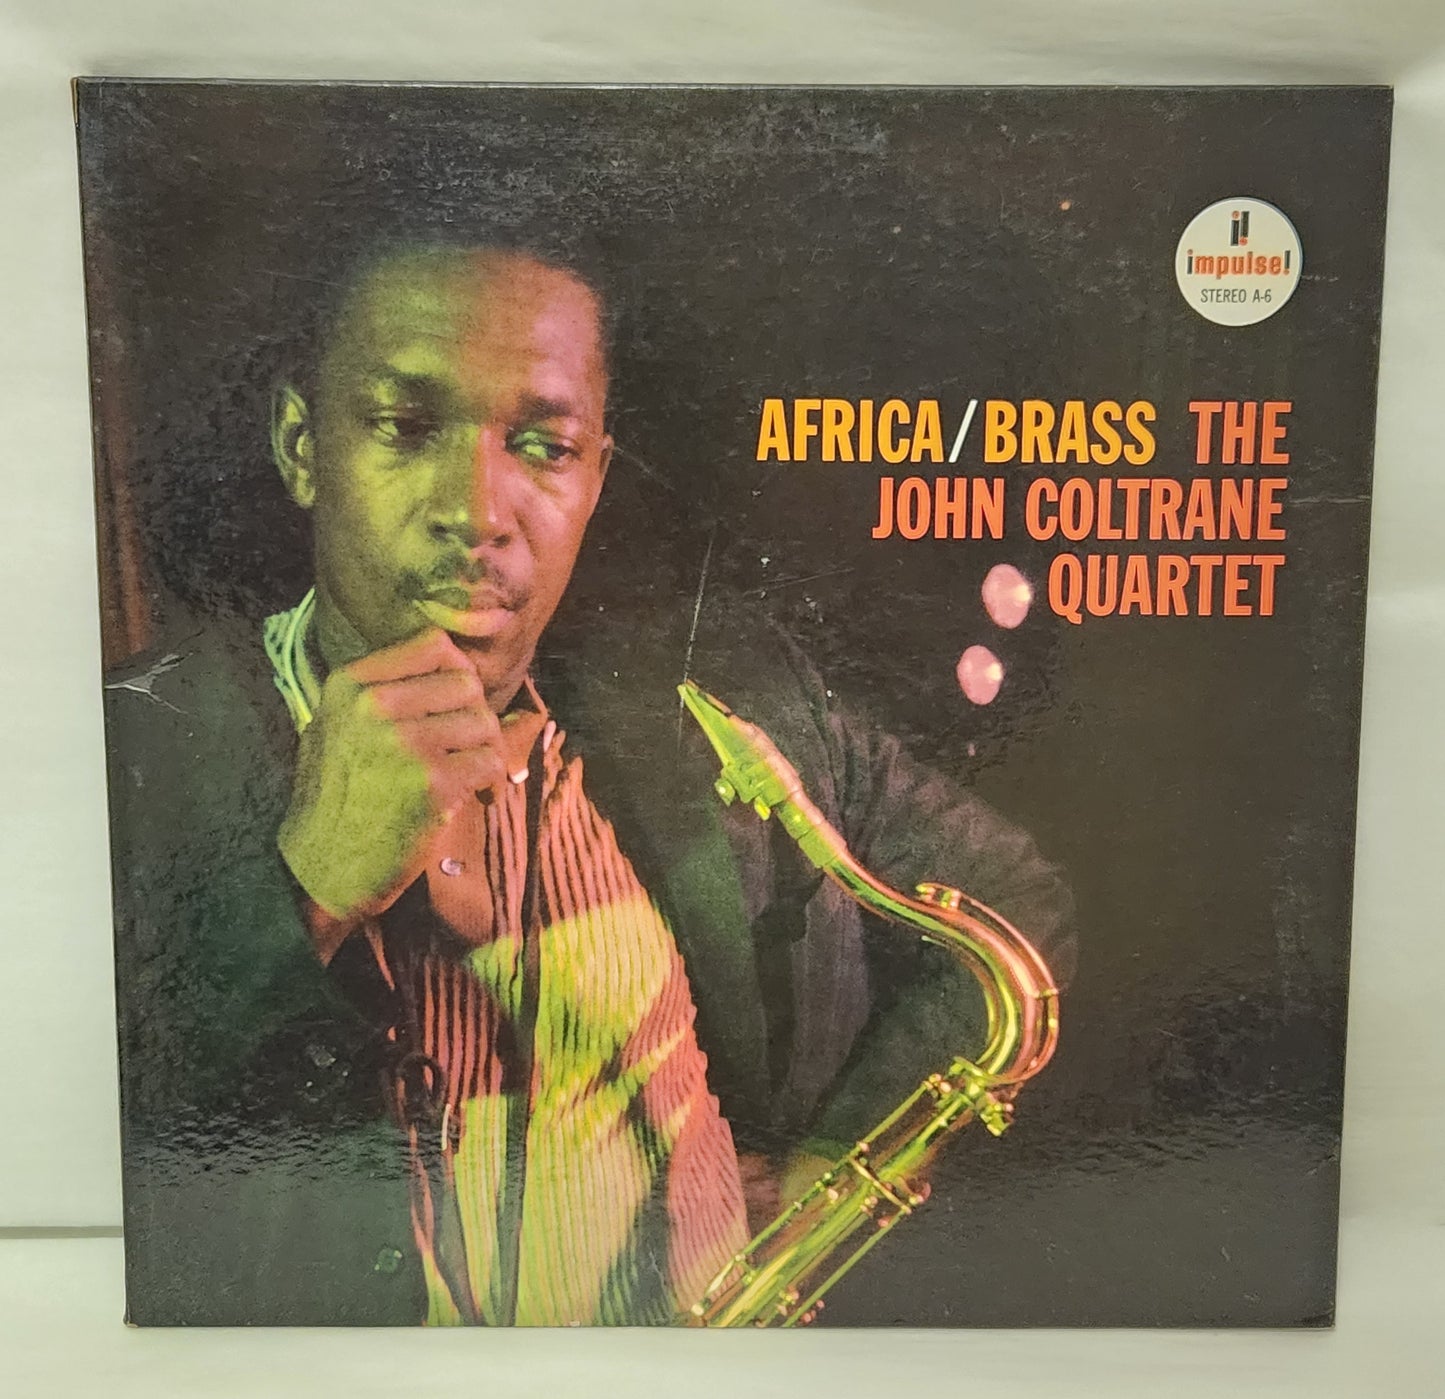 The John Coltrane Quartet "Africa / Brass" 1961 Jazz Record Album